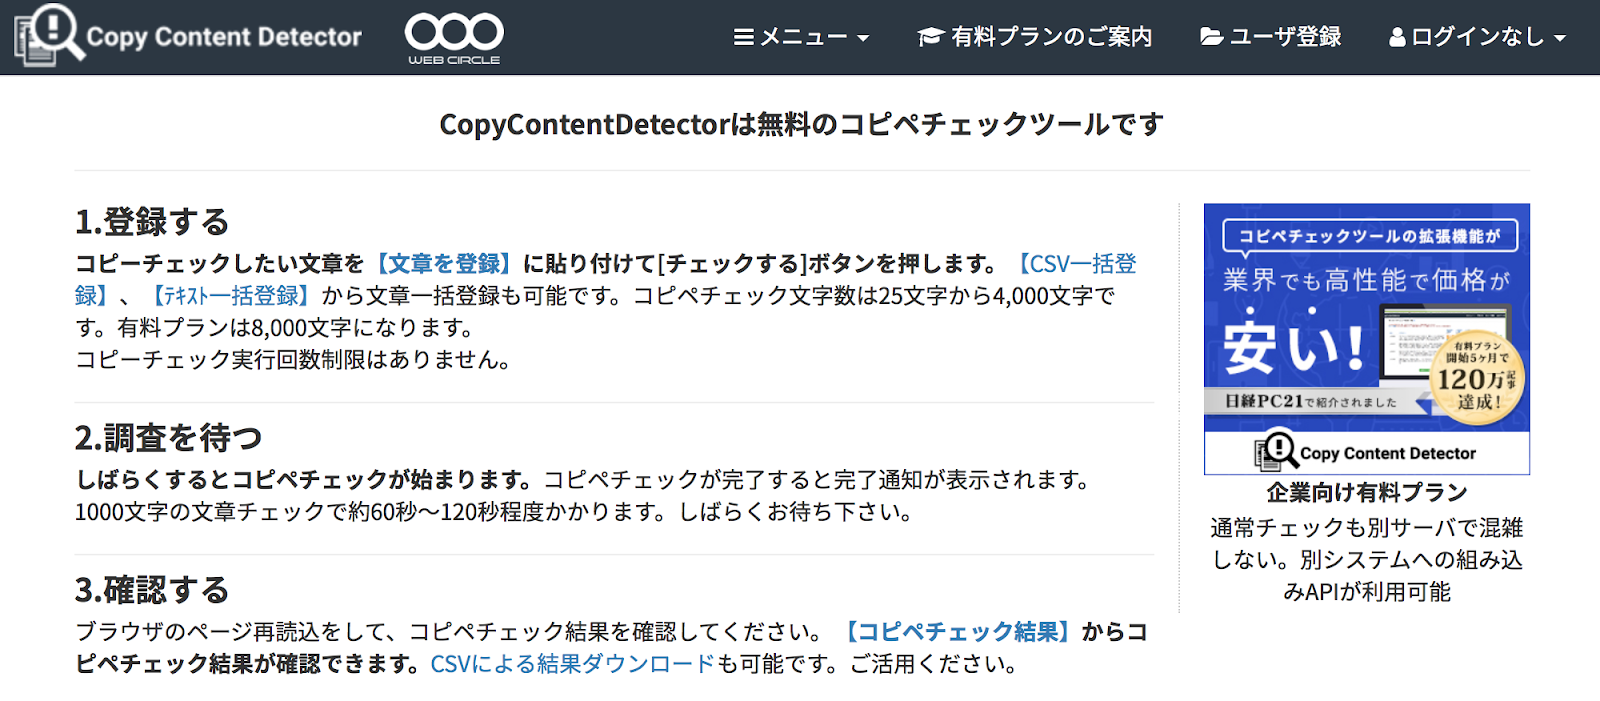 CopyContentDetector